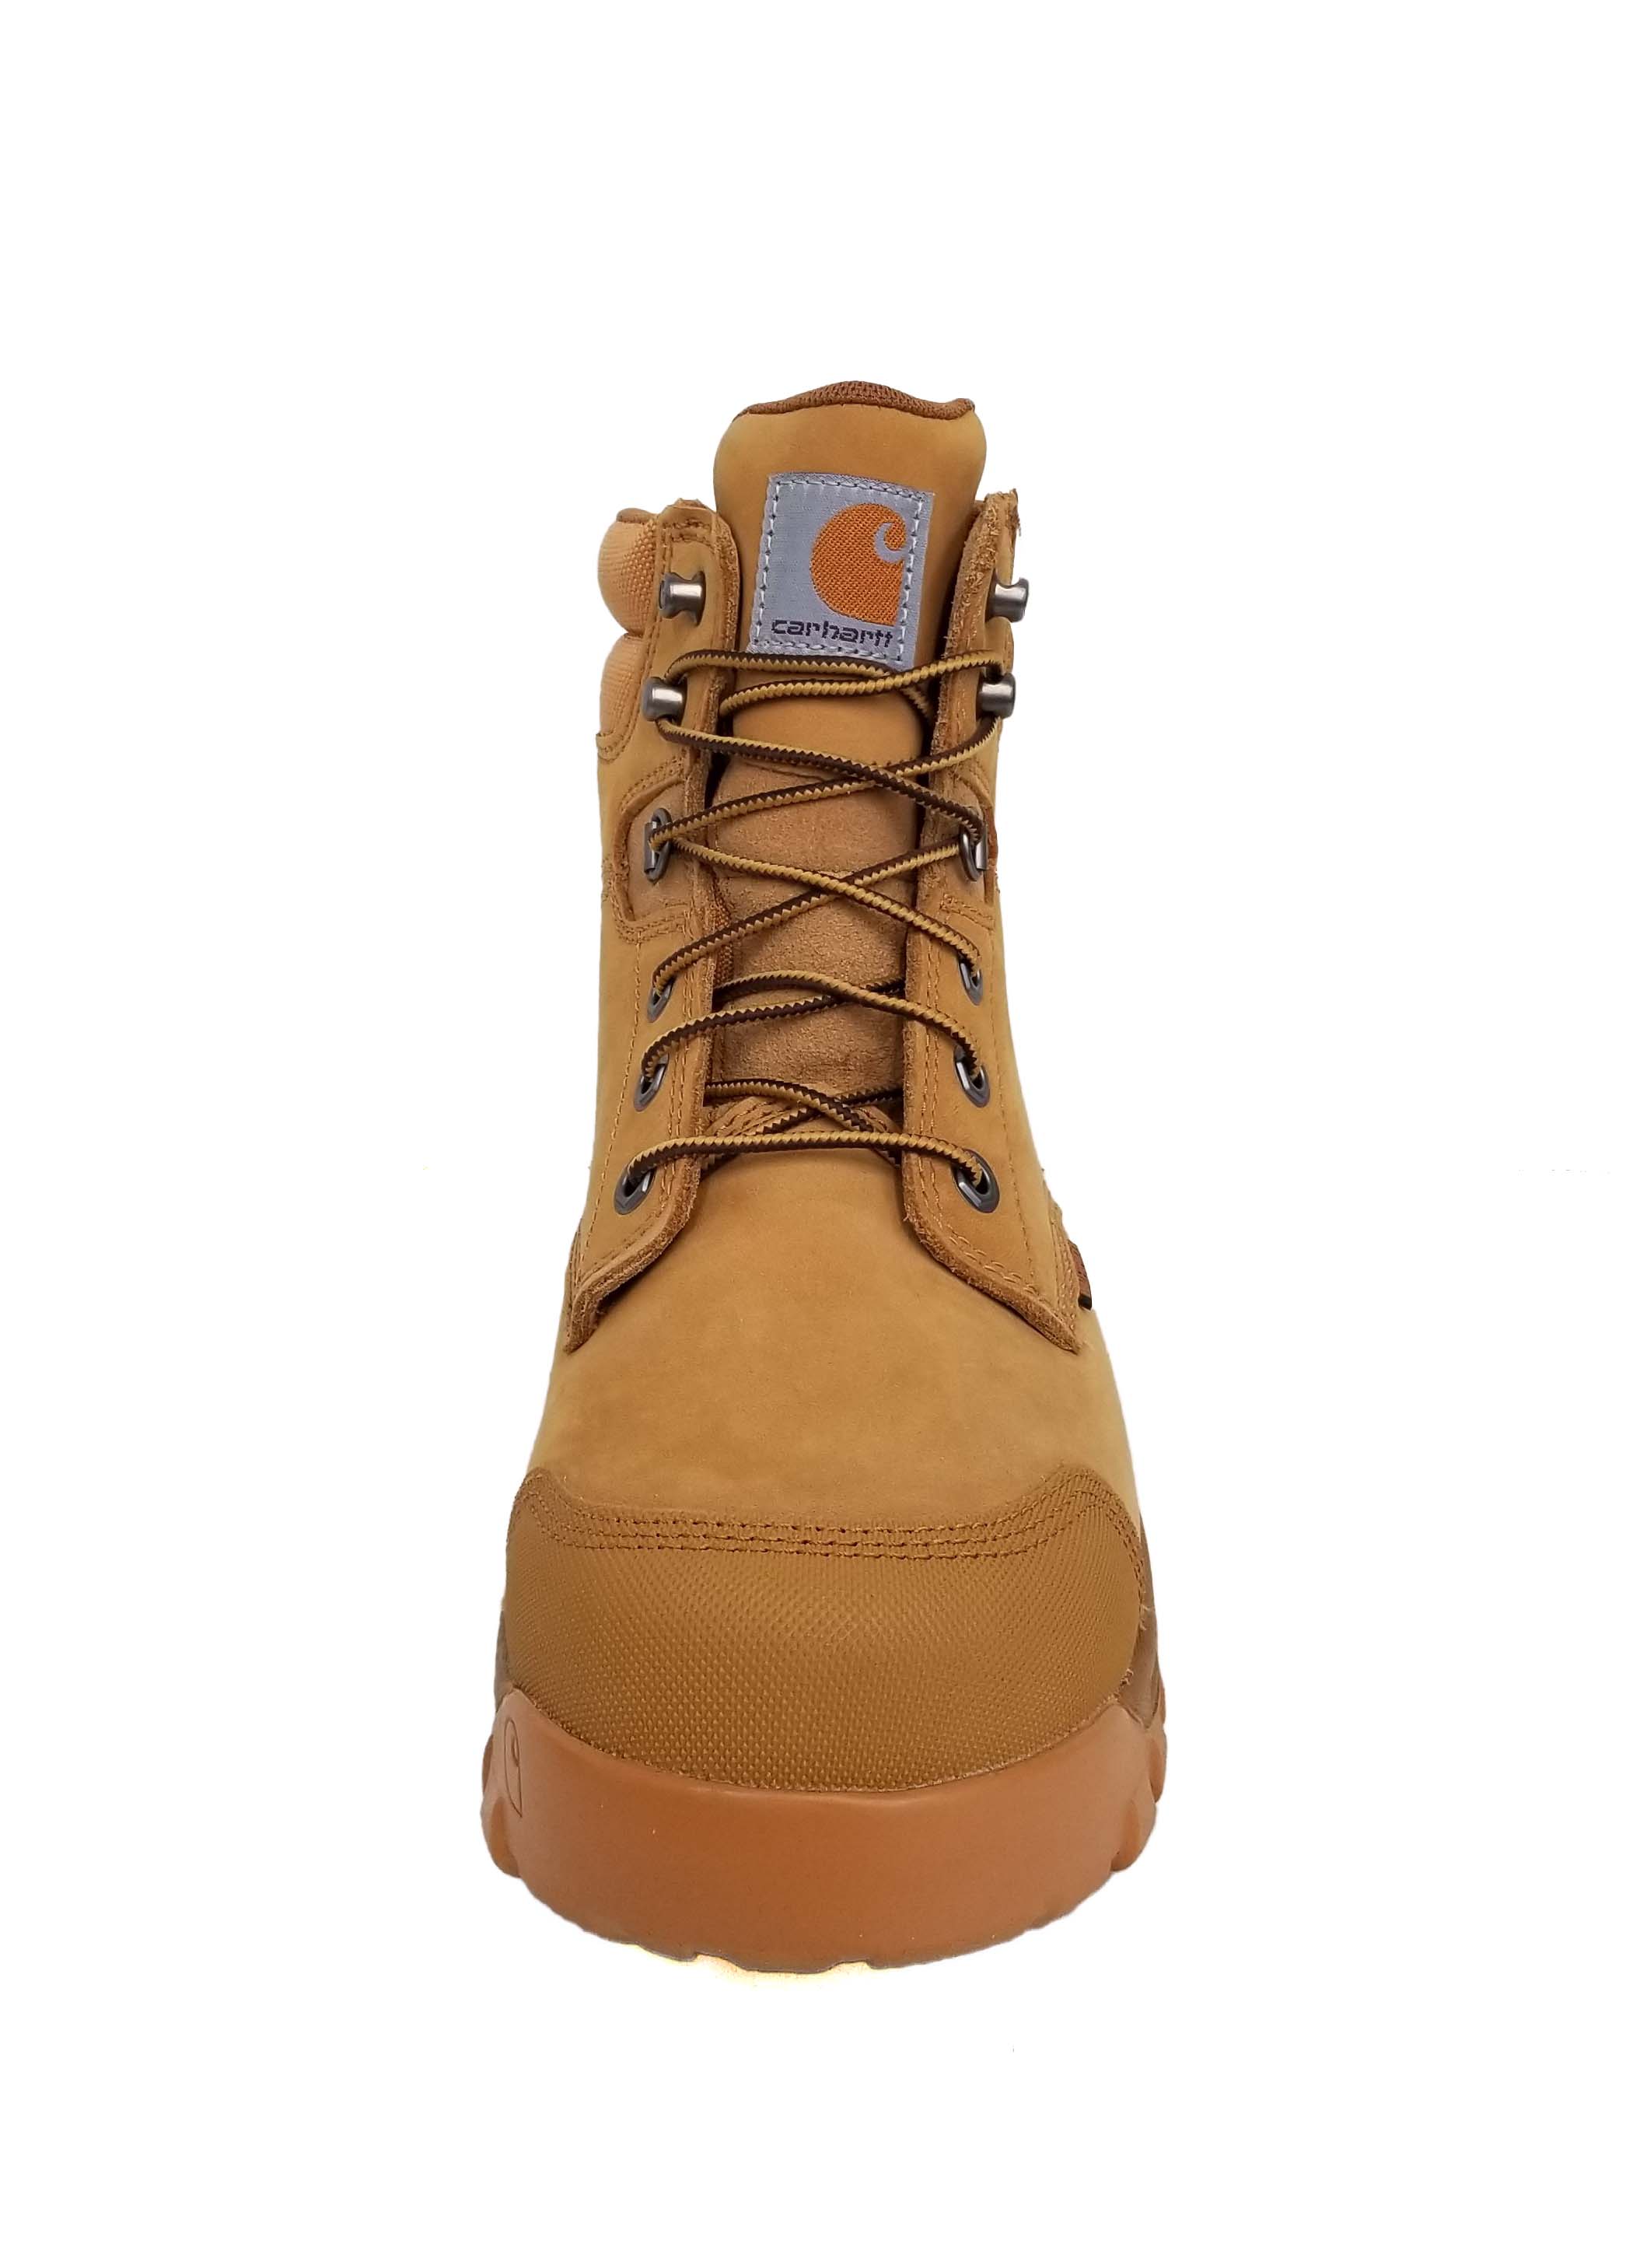 Carhartt Men's 6" Rugged Flex Waterproof Soft Toe Work Boot, CMF6056